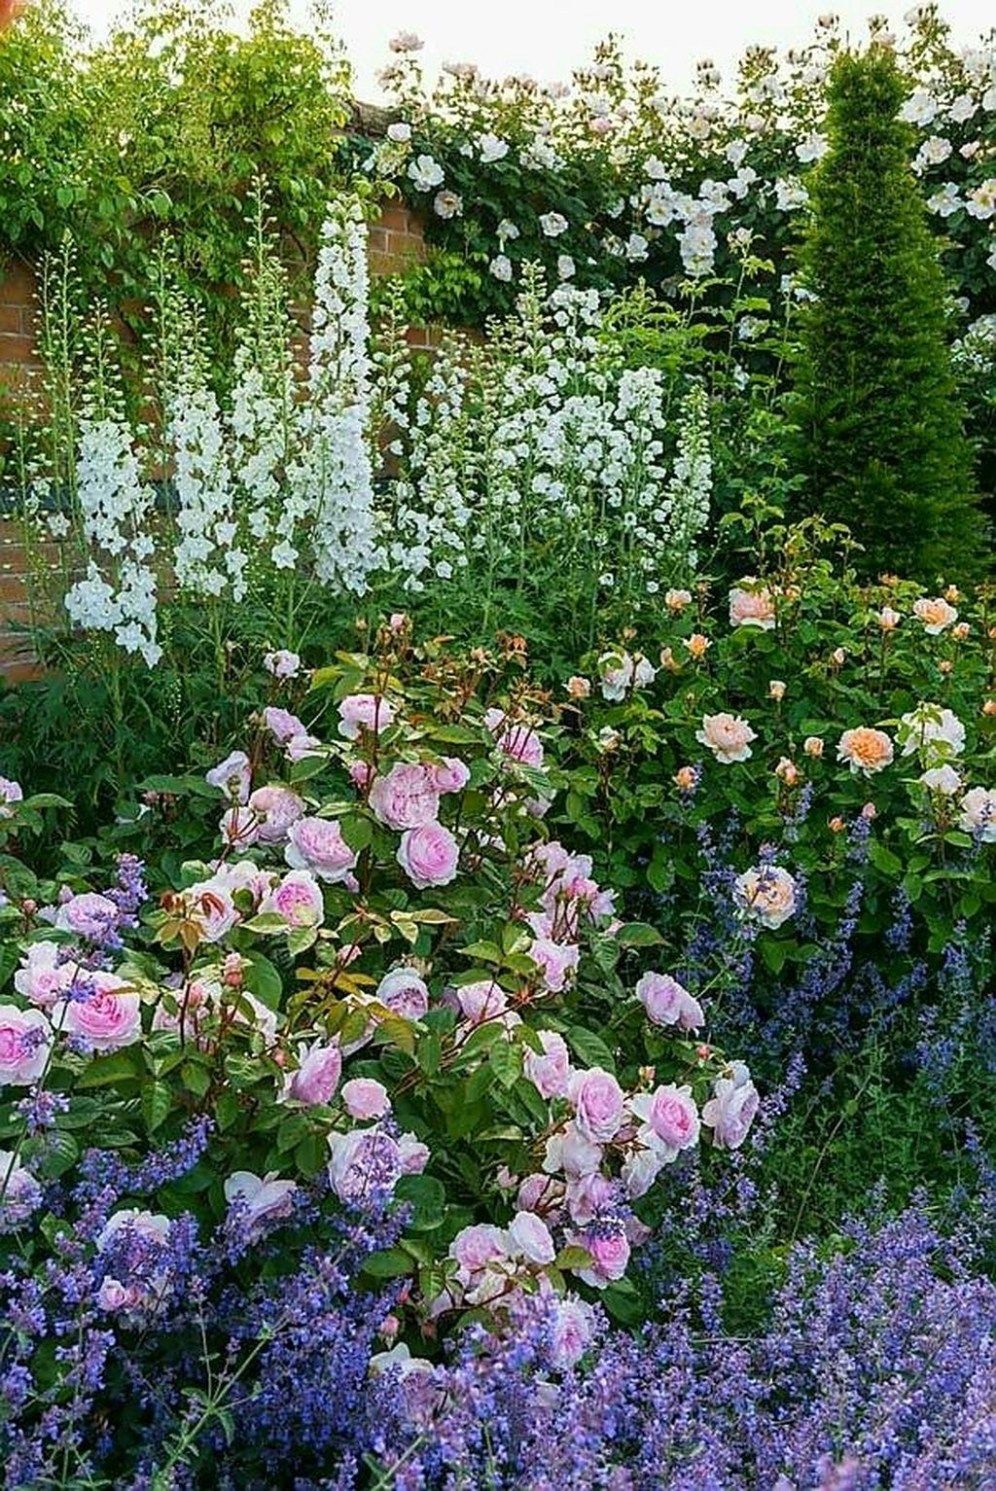 Beautiful Small Cottage Flowers Garden
for Backyard Ideas